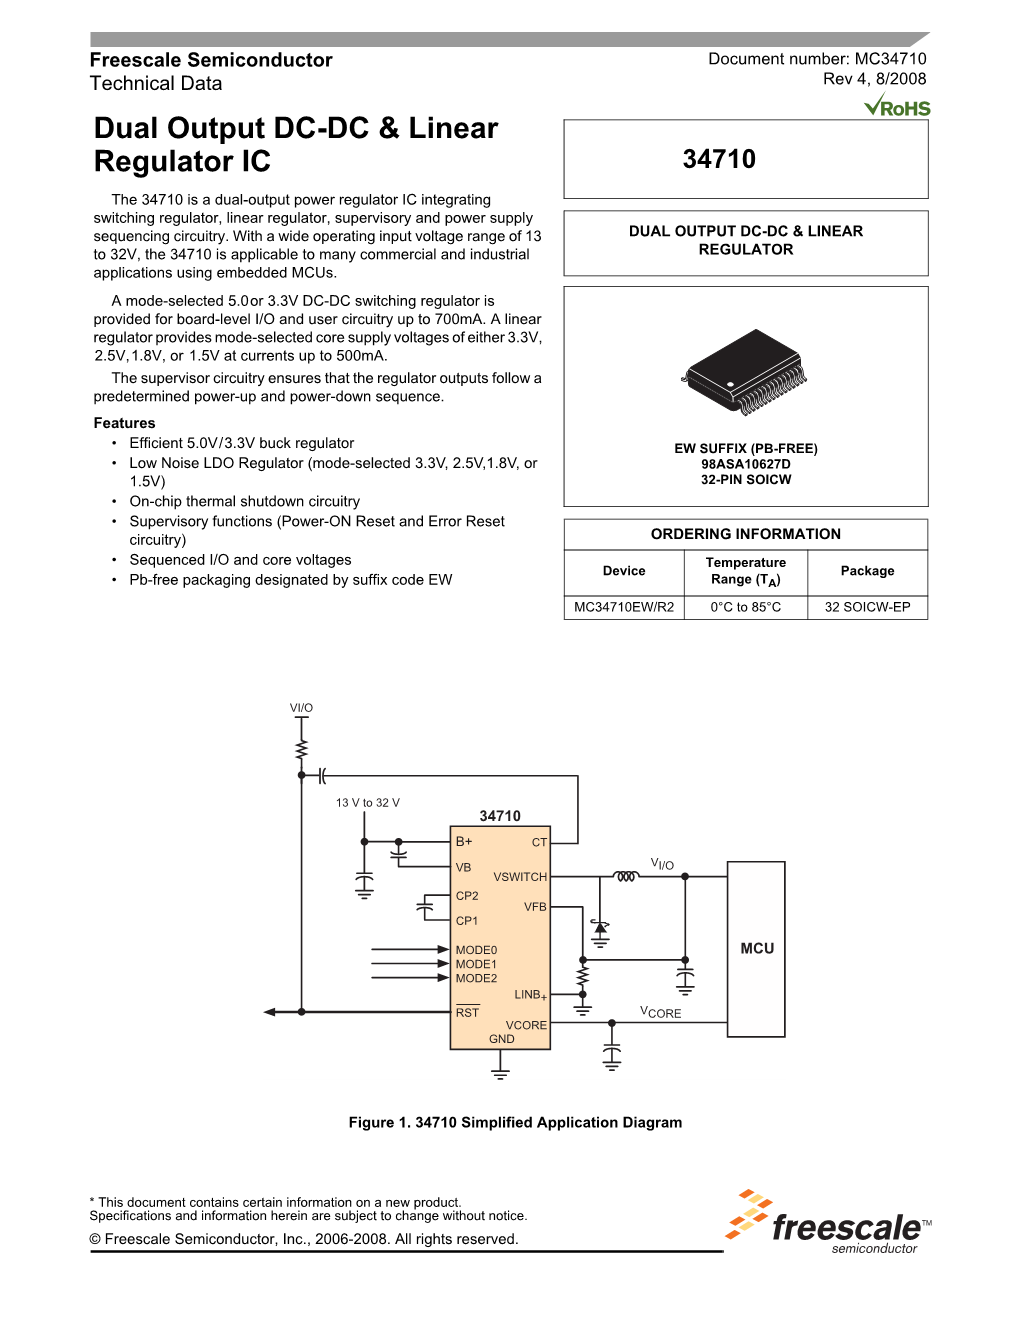 MC34710, Dual Output DC-DC & Linear Regulator IC